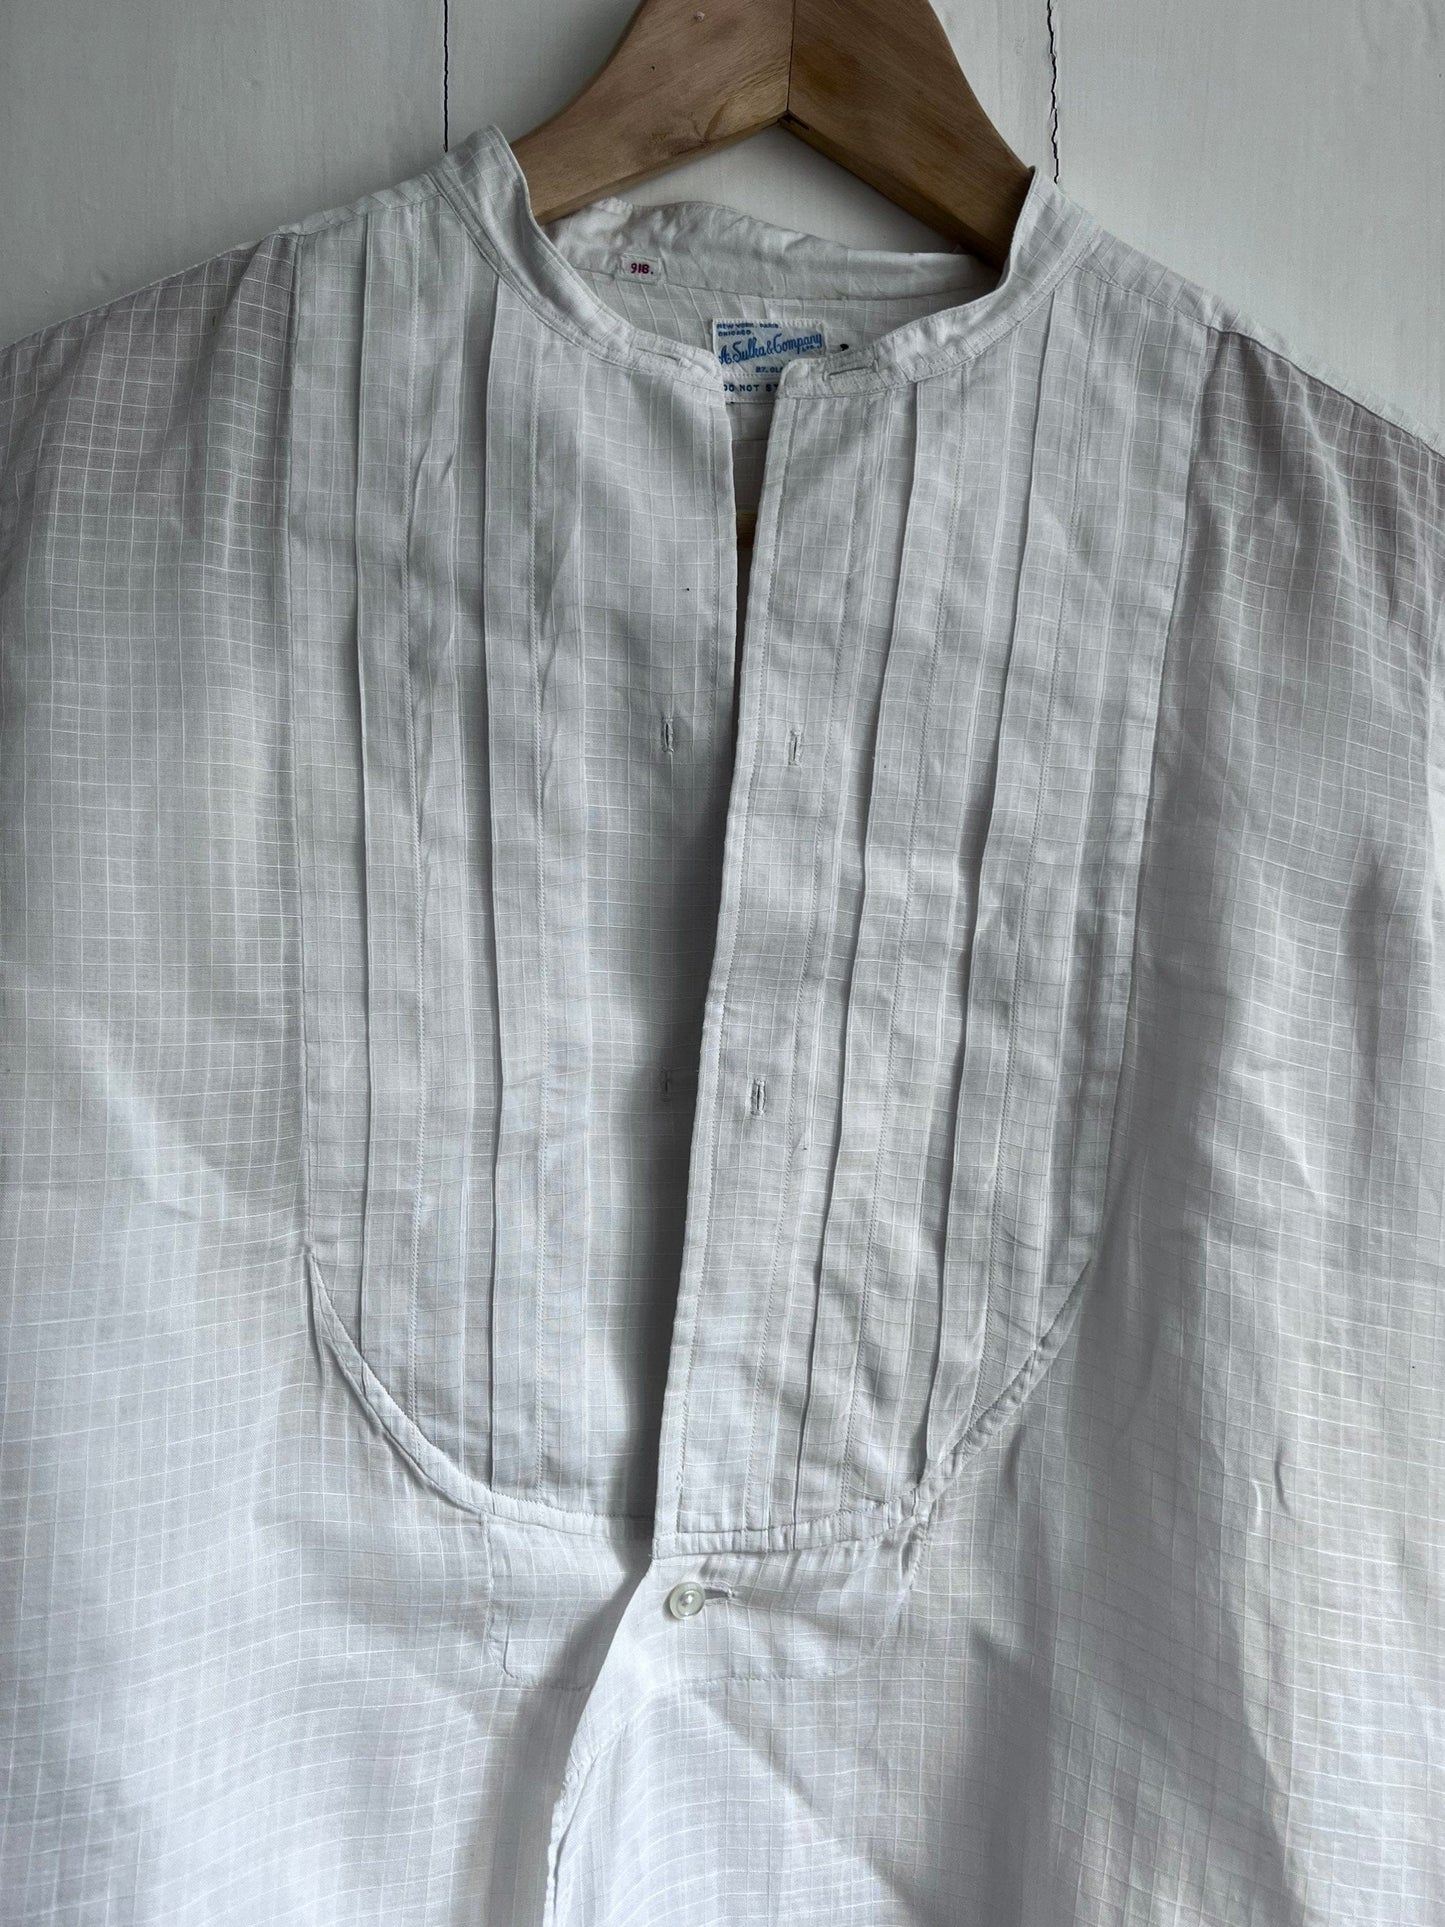 Vintage 1960s Dress Shirt A Sulka & Company Bespoke White Linen Check ...